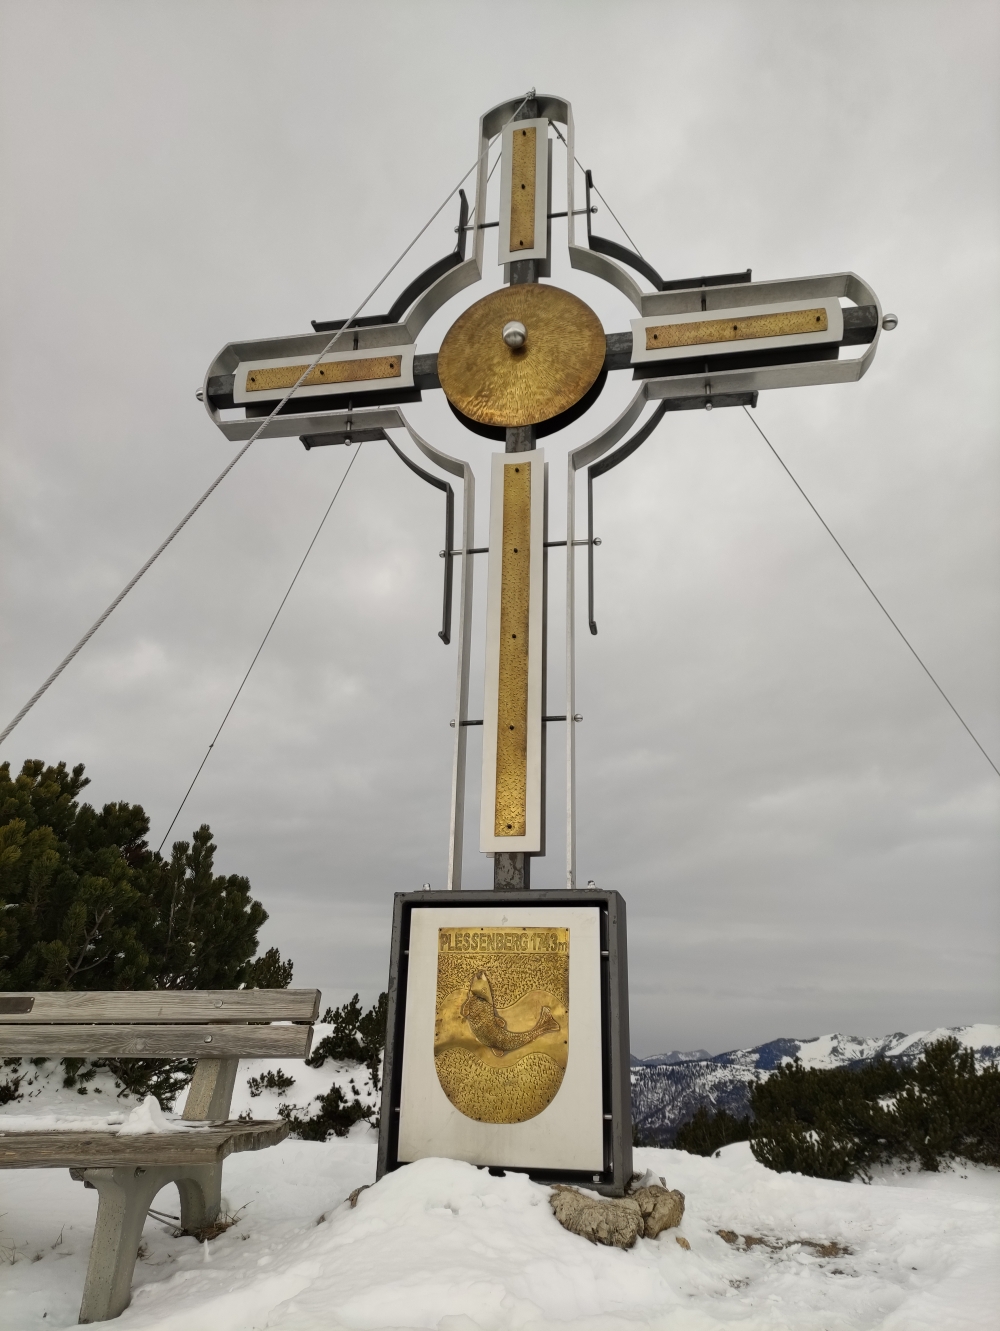 Gipfelkreuz (Plessenberg)